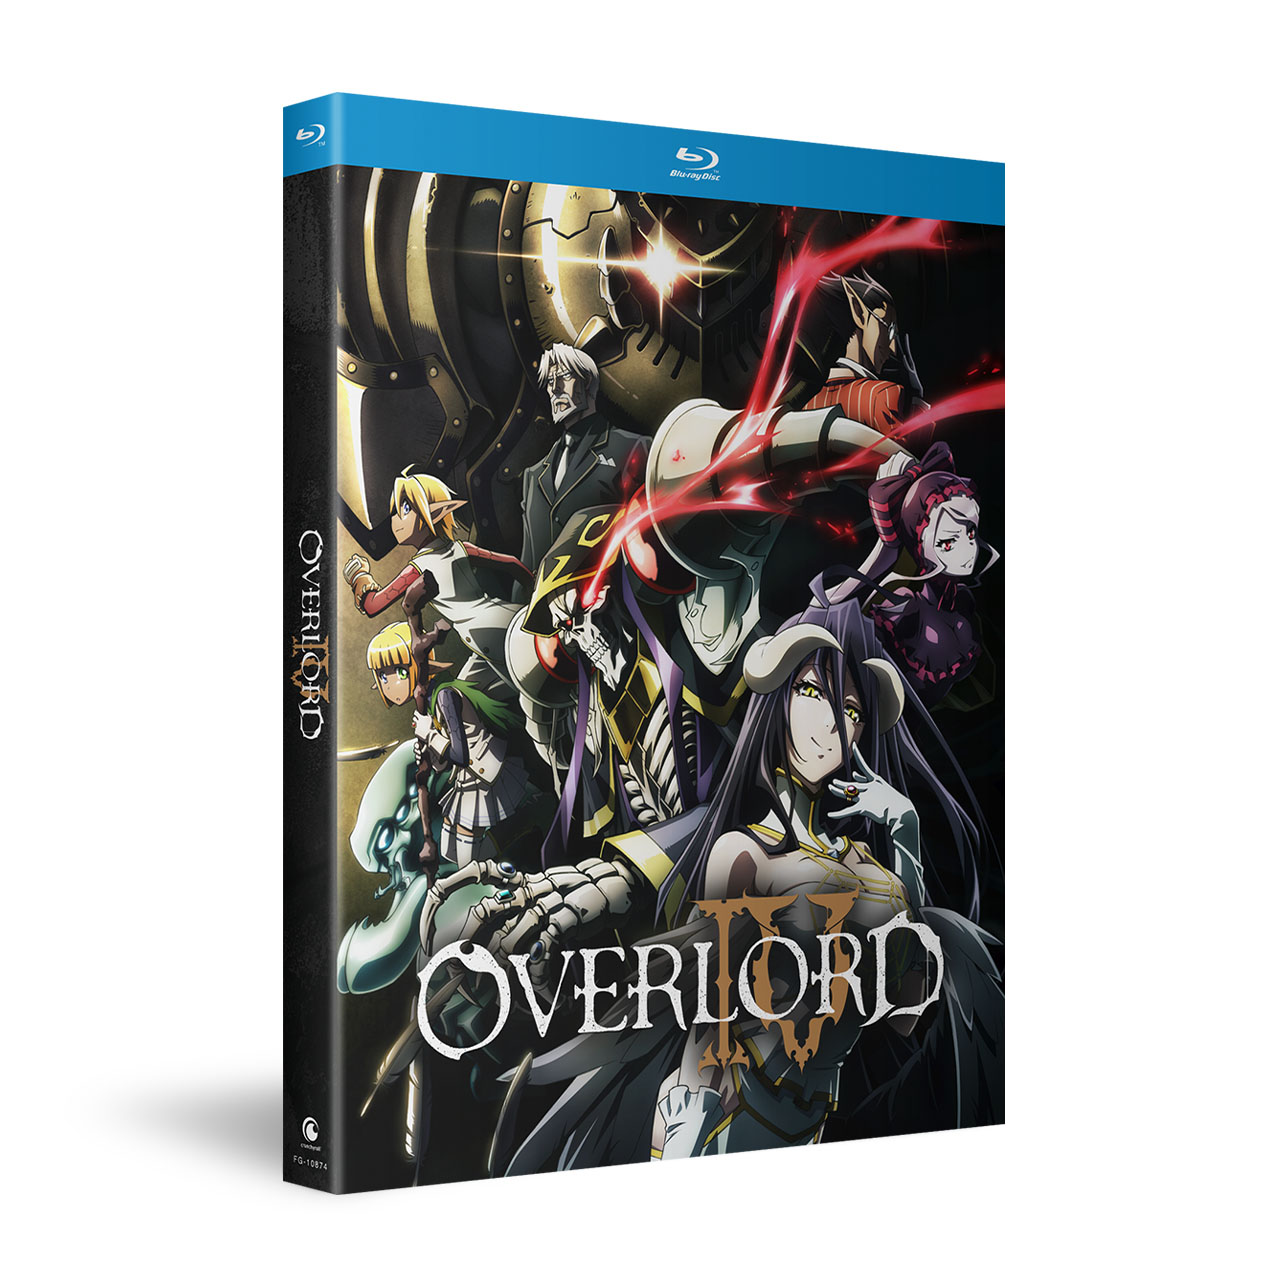 Overlord IV - Season 4 - Blu-ray